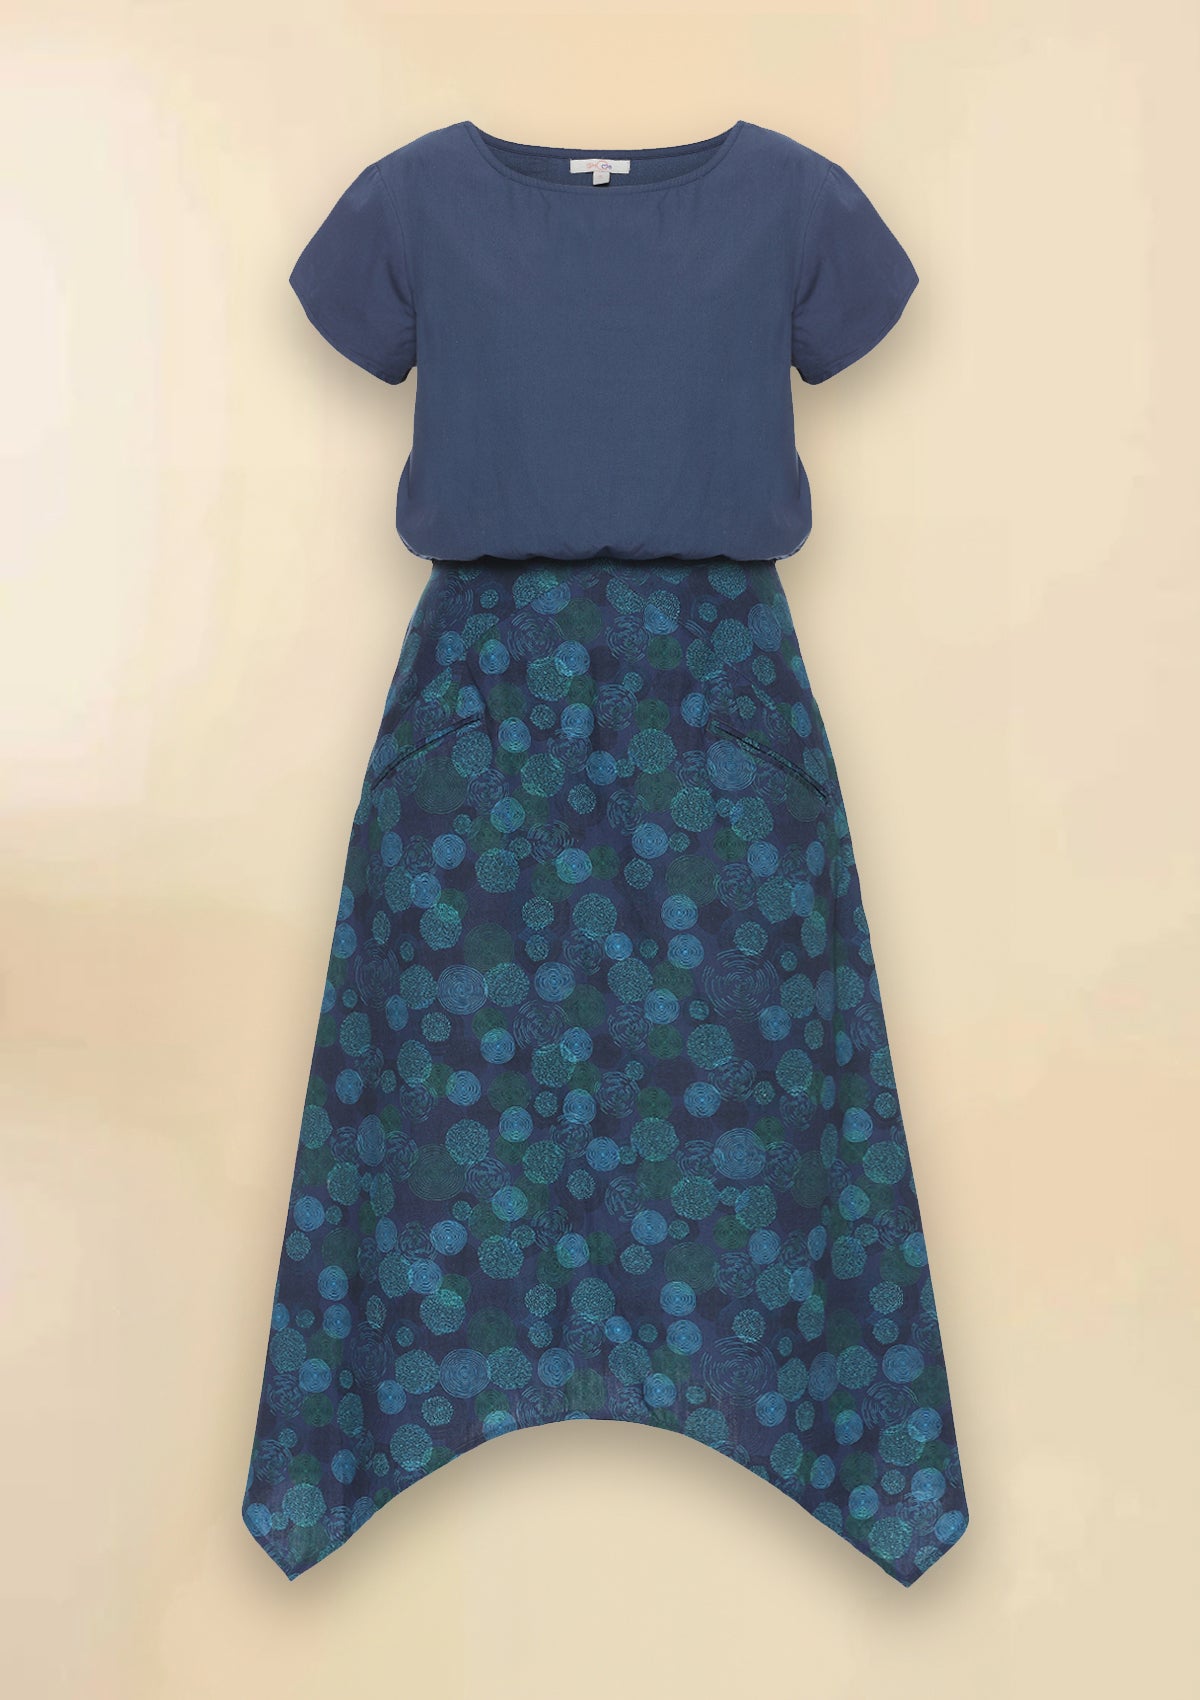 Aegean - Retro Printed Crop Top and Skirt - IshqMe